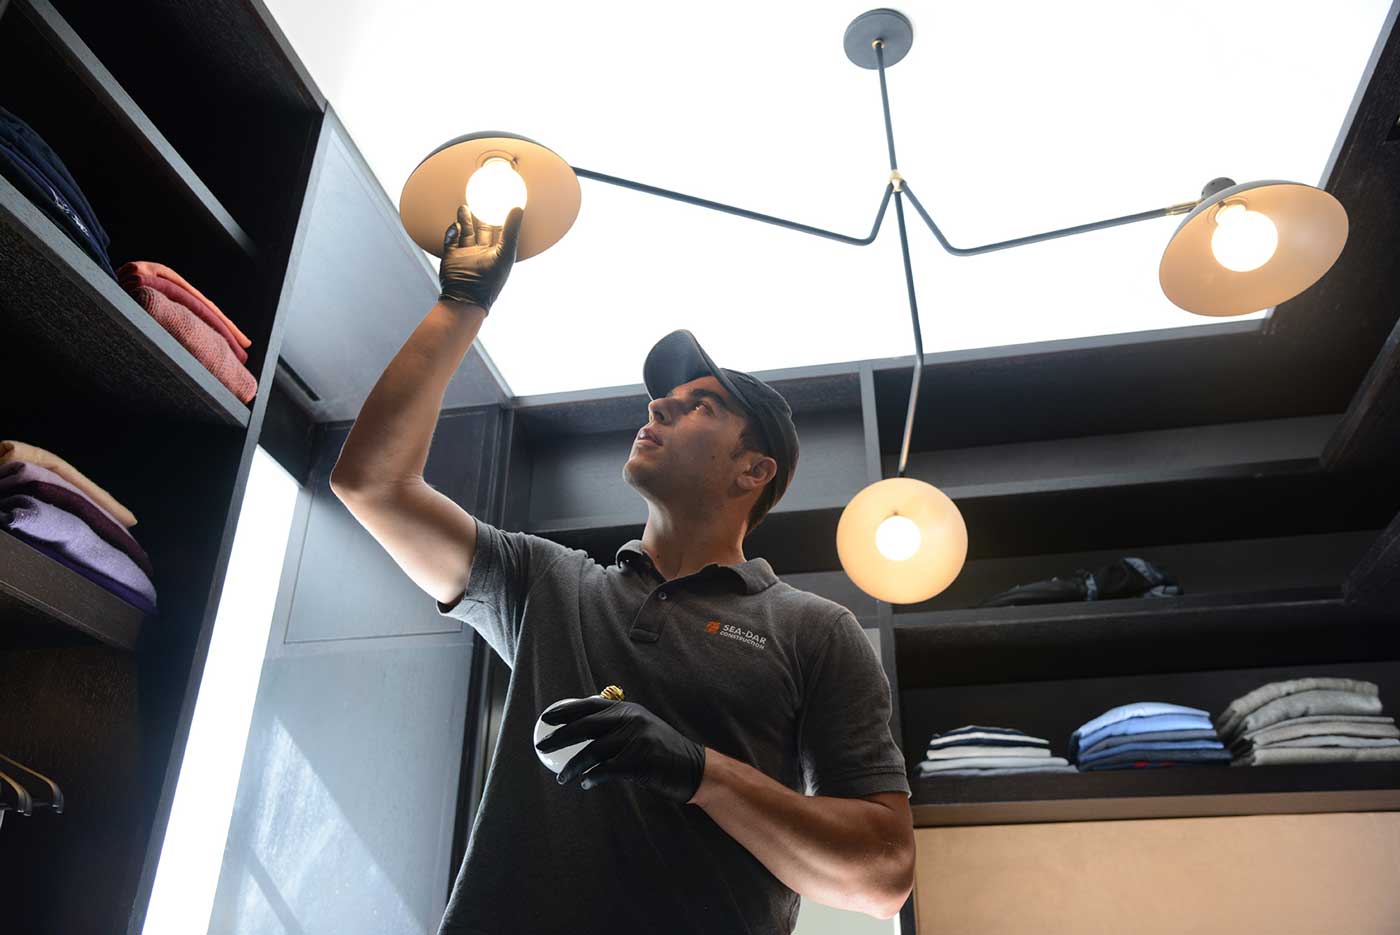 Man changing lightbulb in closet